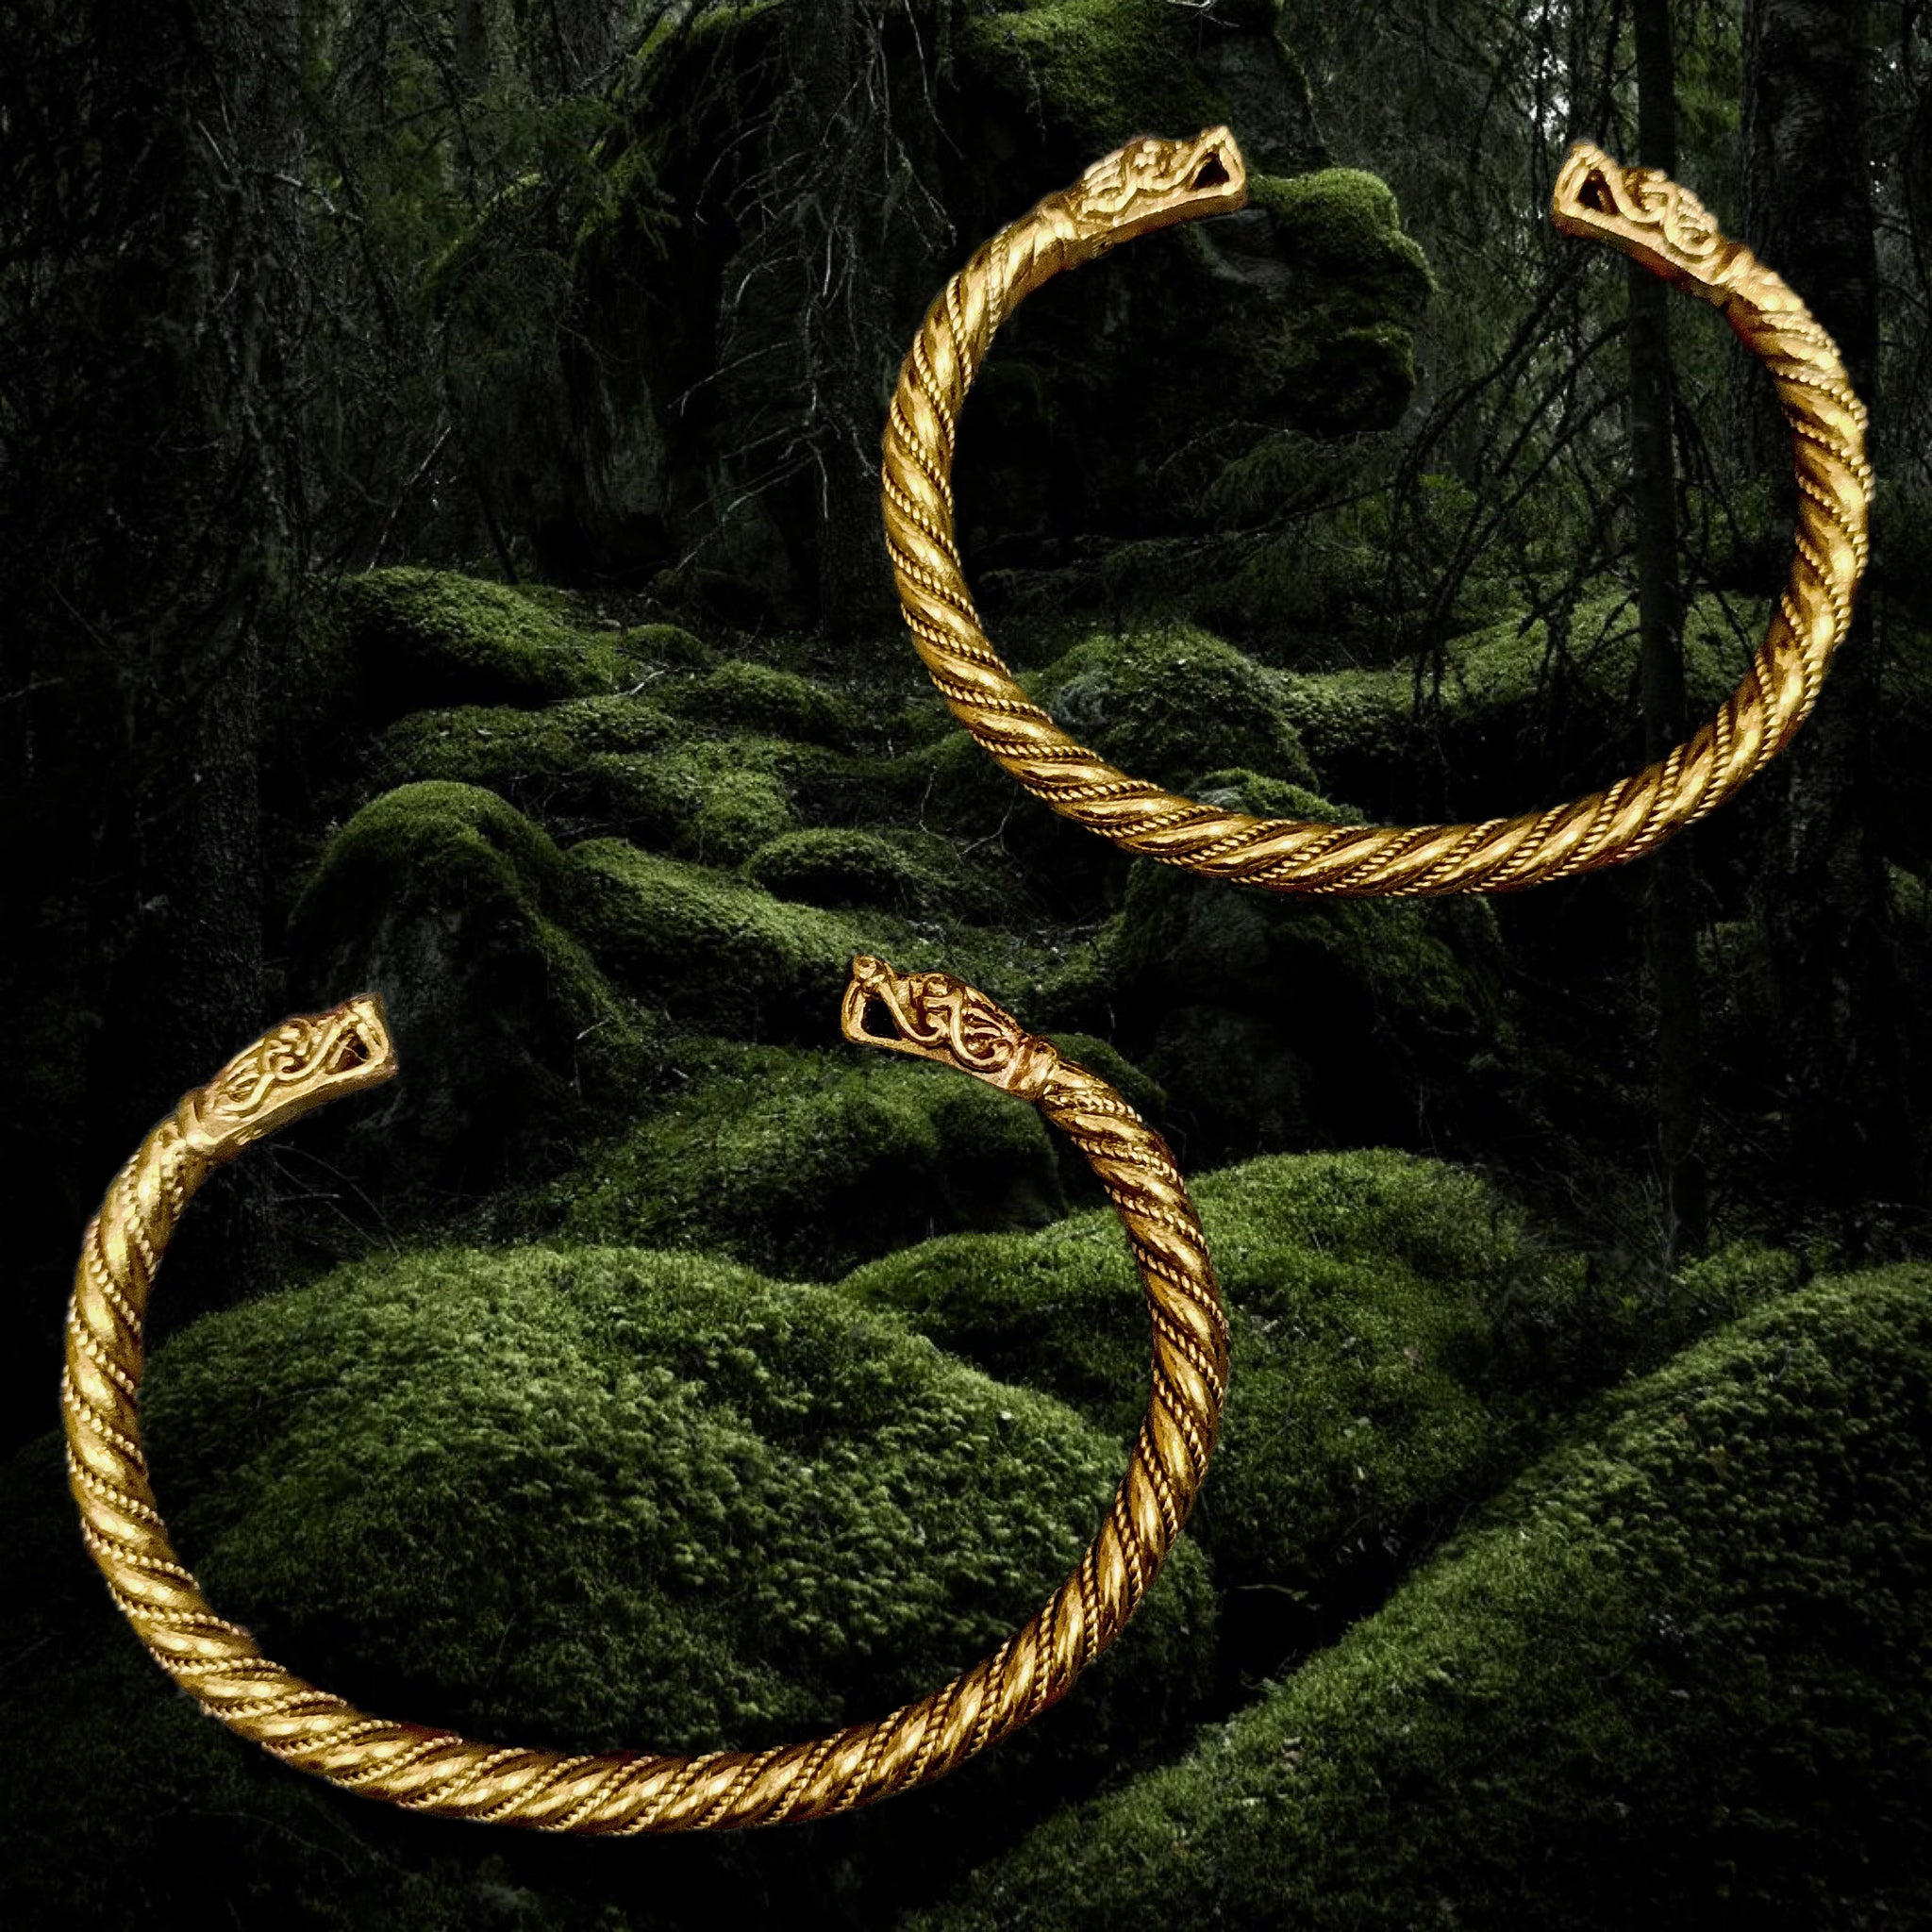 Handmade Twisted Bronze Bracelets With Gotlandic Dragon Heads